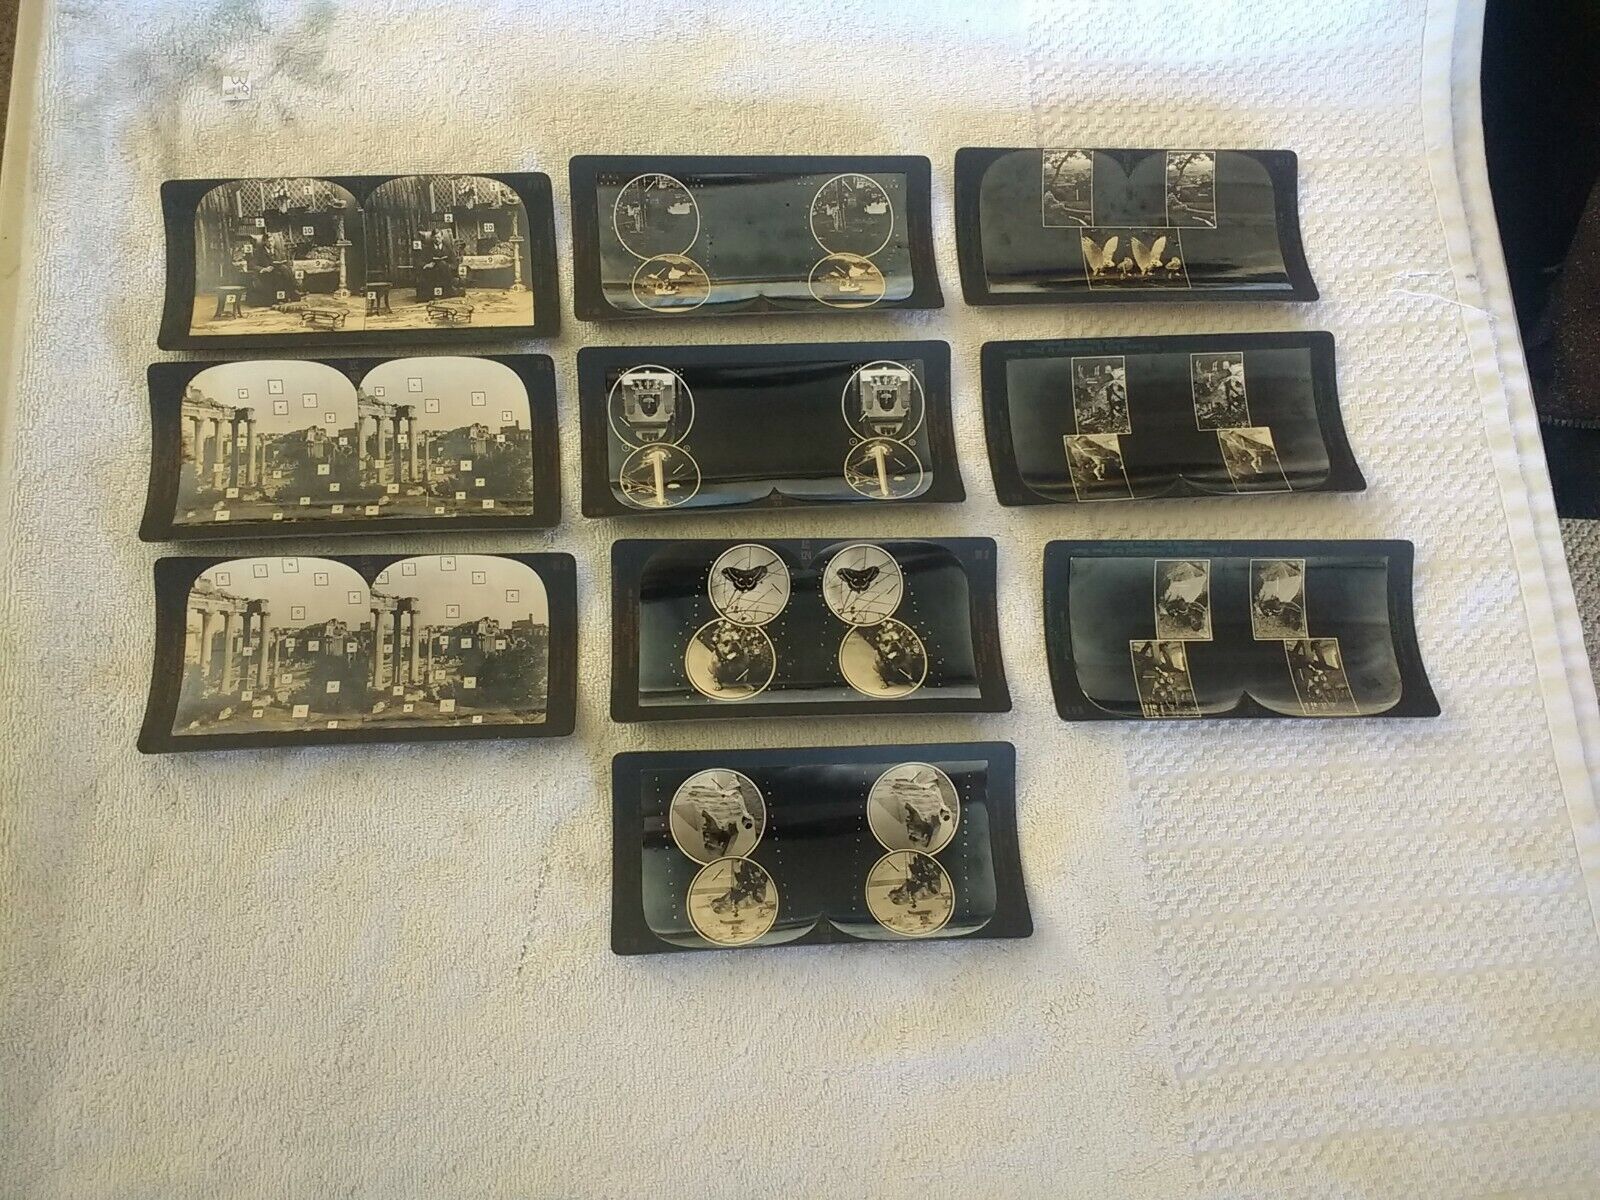 10 Antique Keystone View Co Eye Comfort Depth Perception Stereoscopic Cards